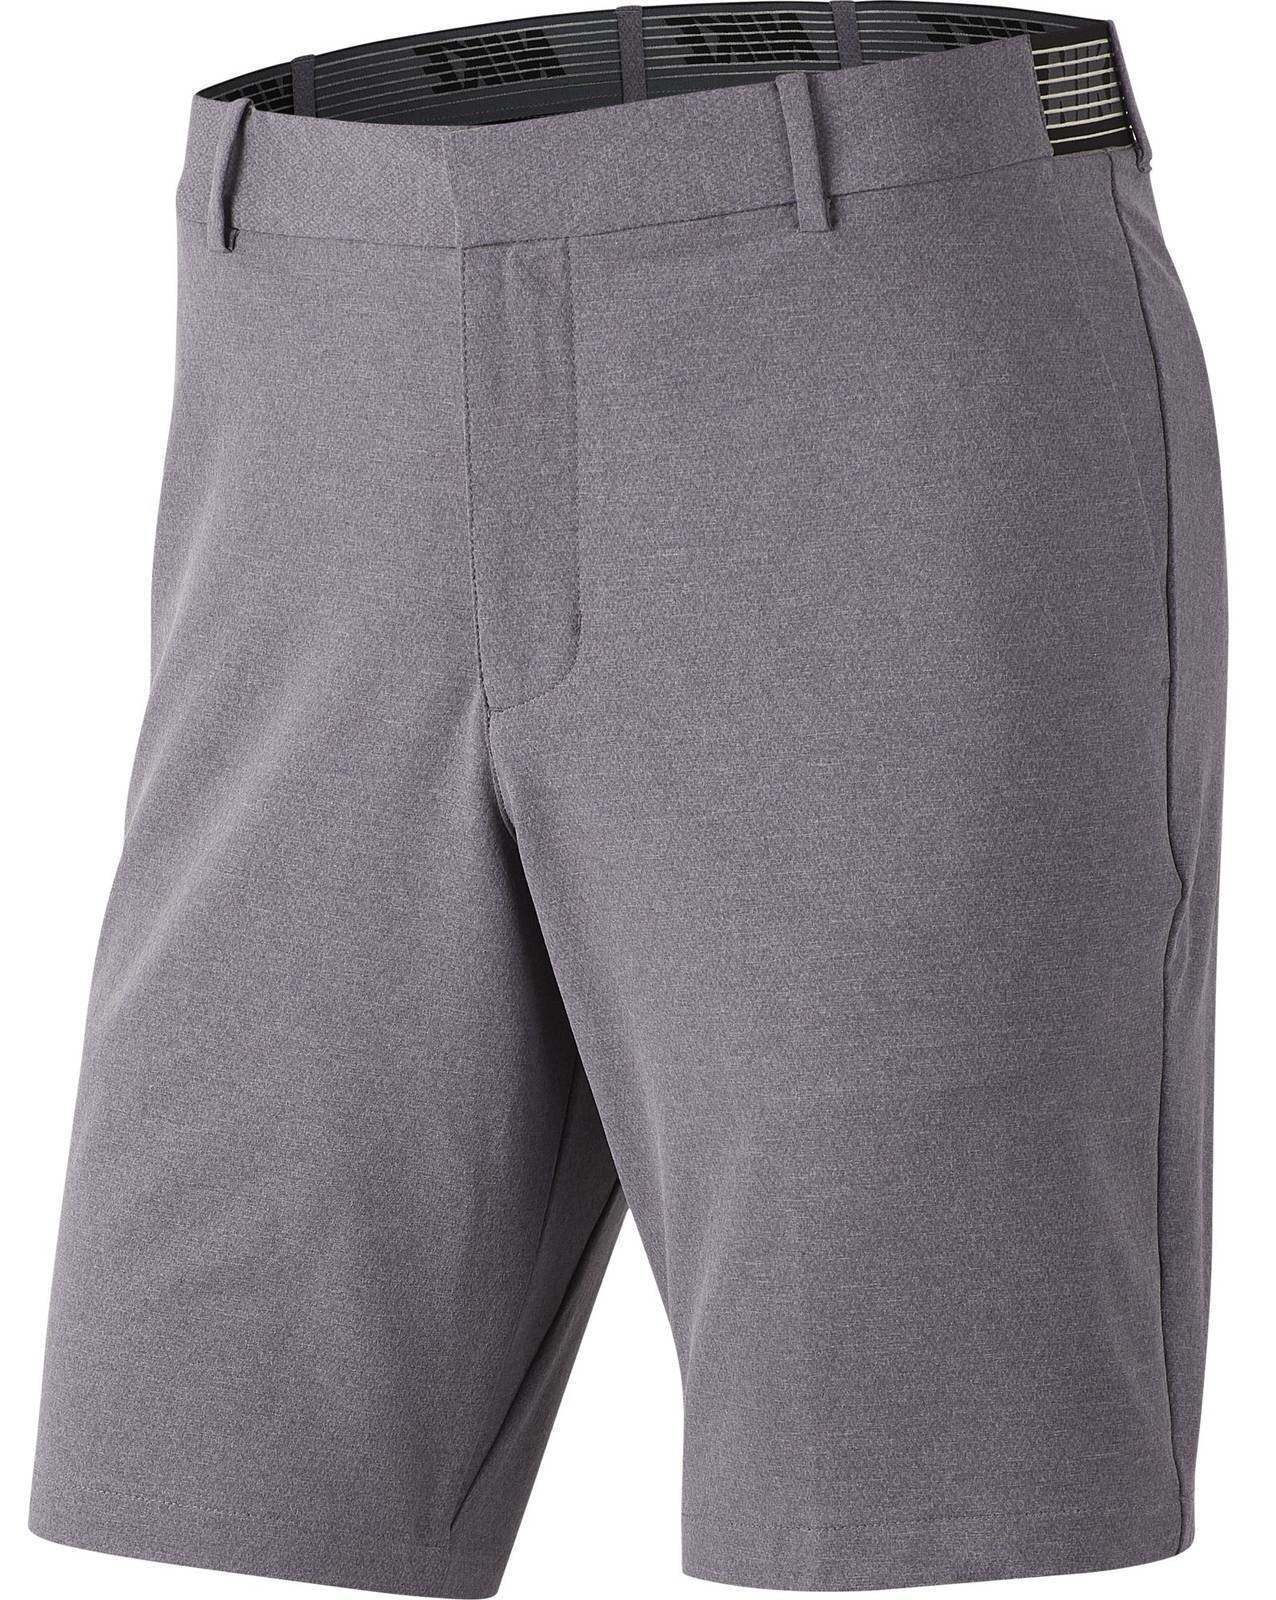 Pantalones cortos Nike Flex Slim Fit Gridiron 34